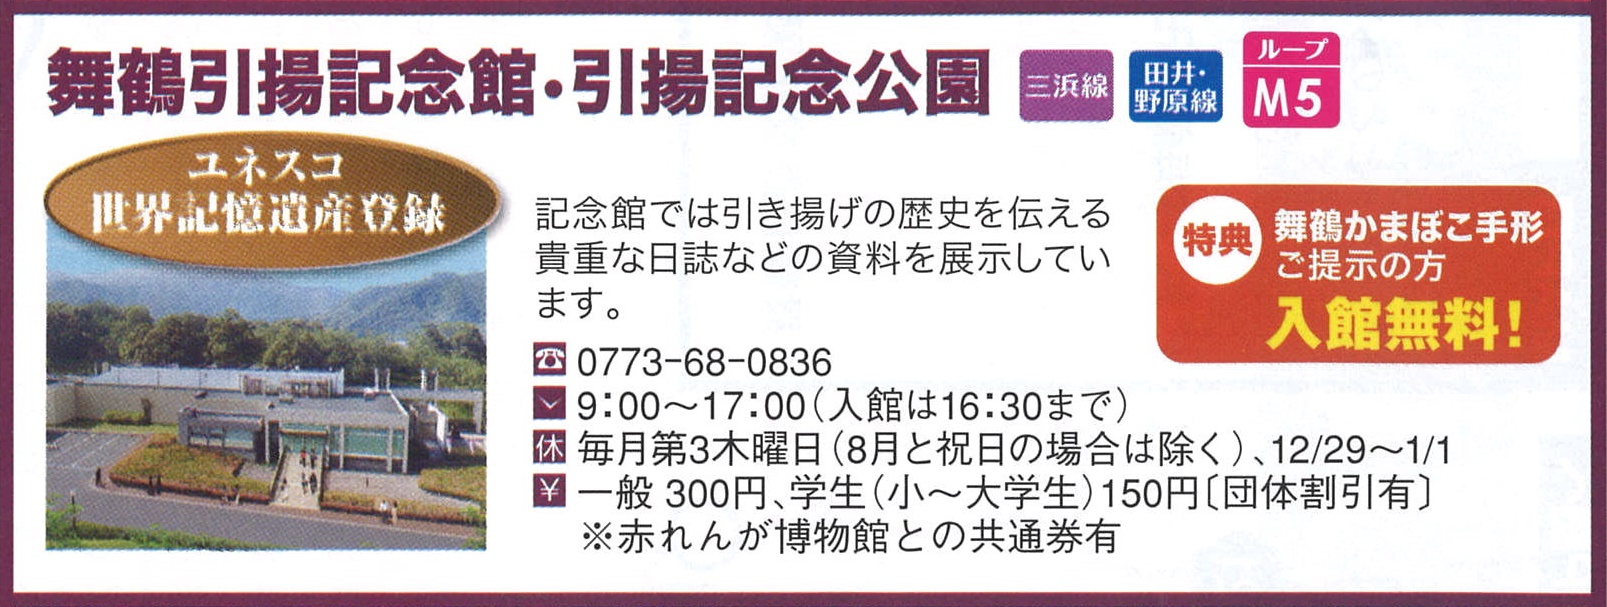 http://www.maizuru-kanko.net/event/img/%E5%BC%95%E6%8F%9A.jpg